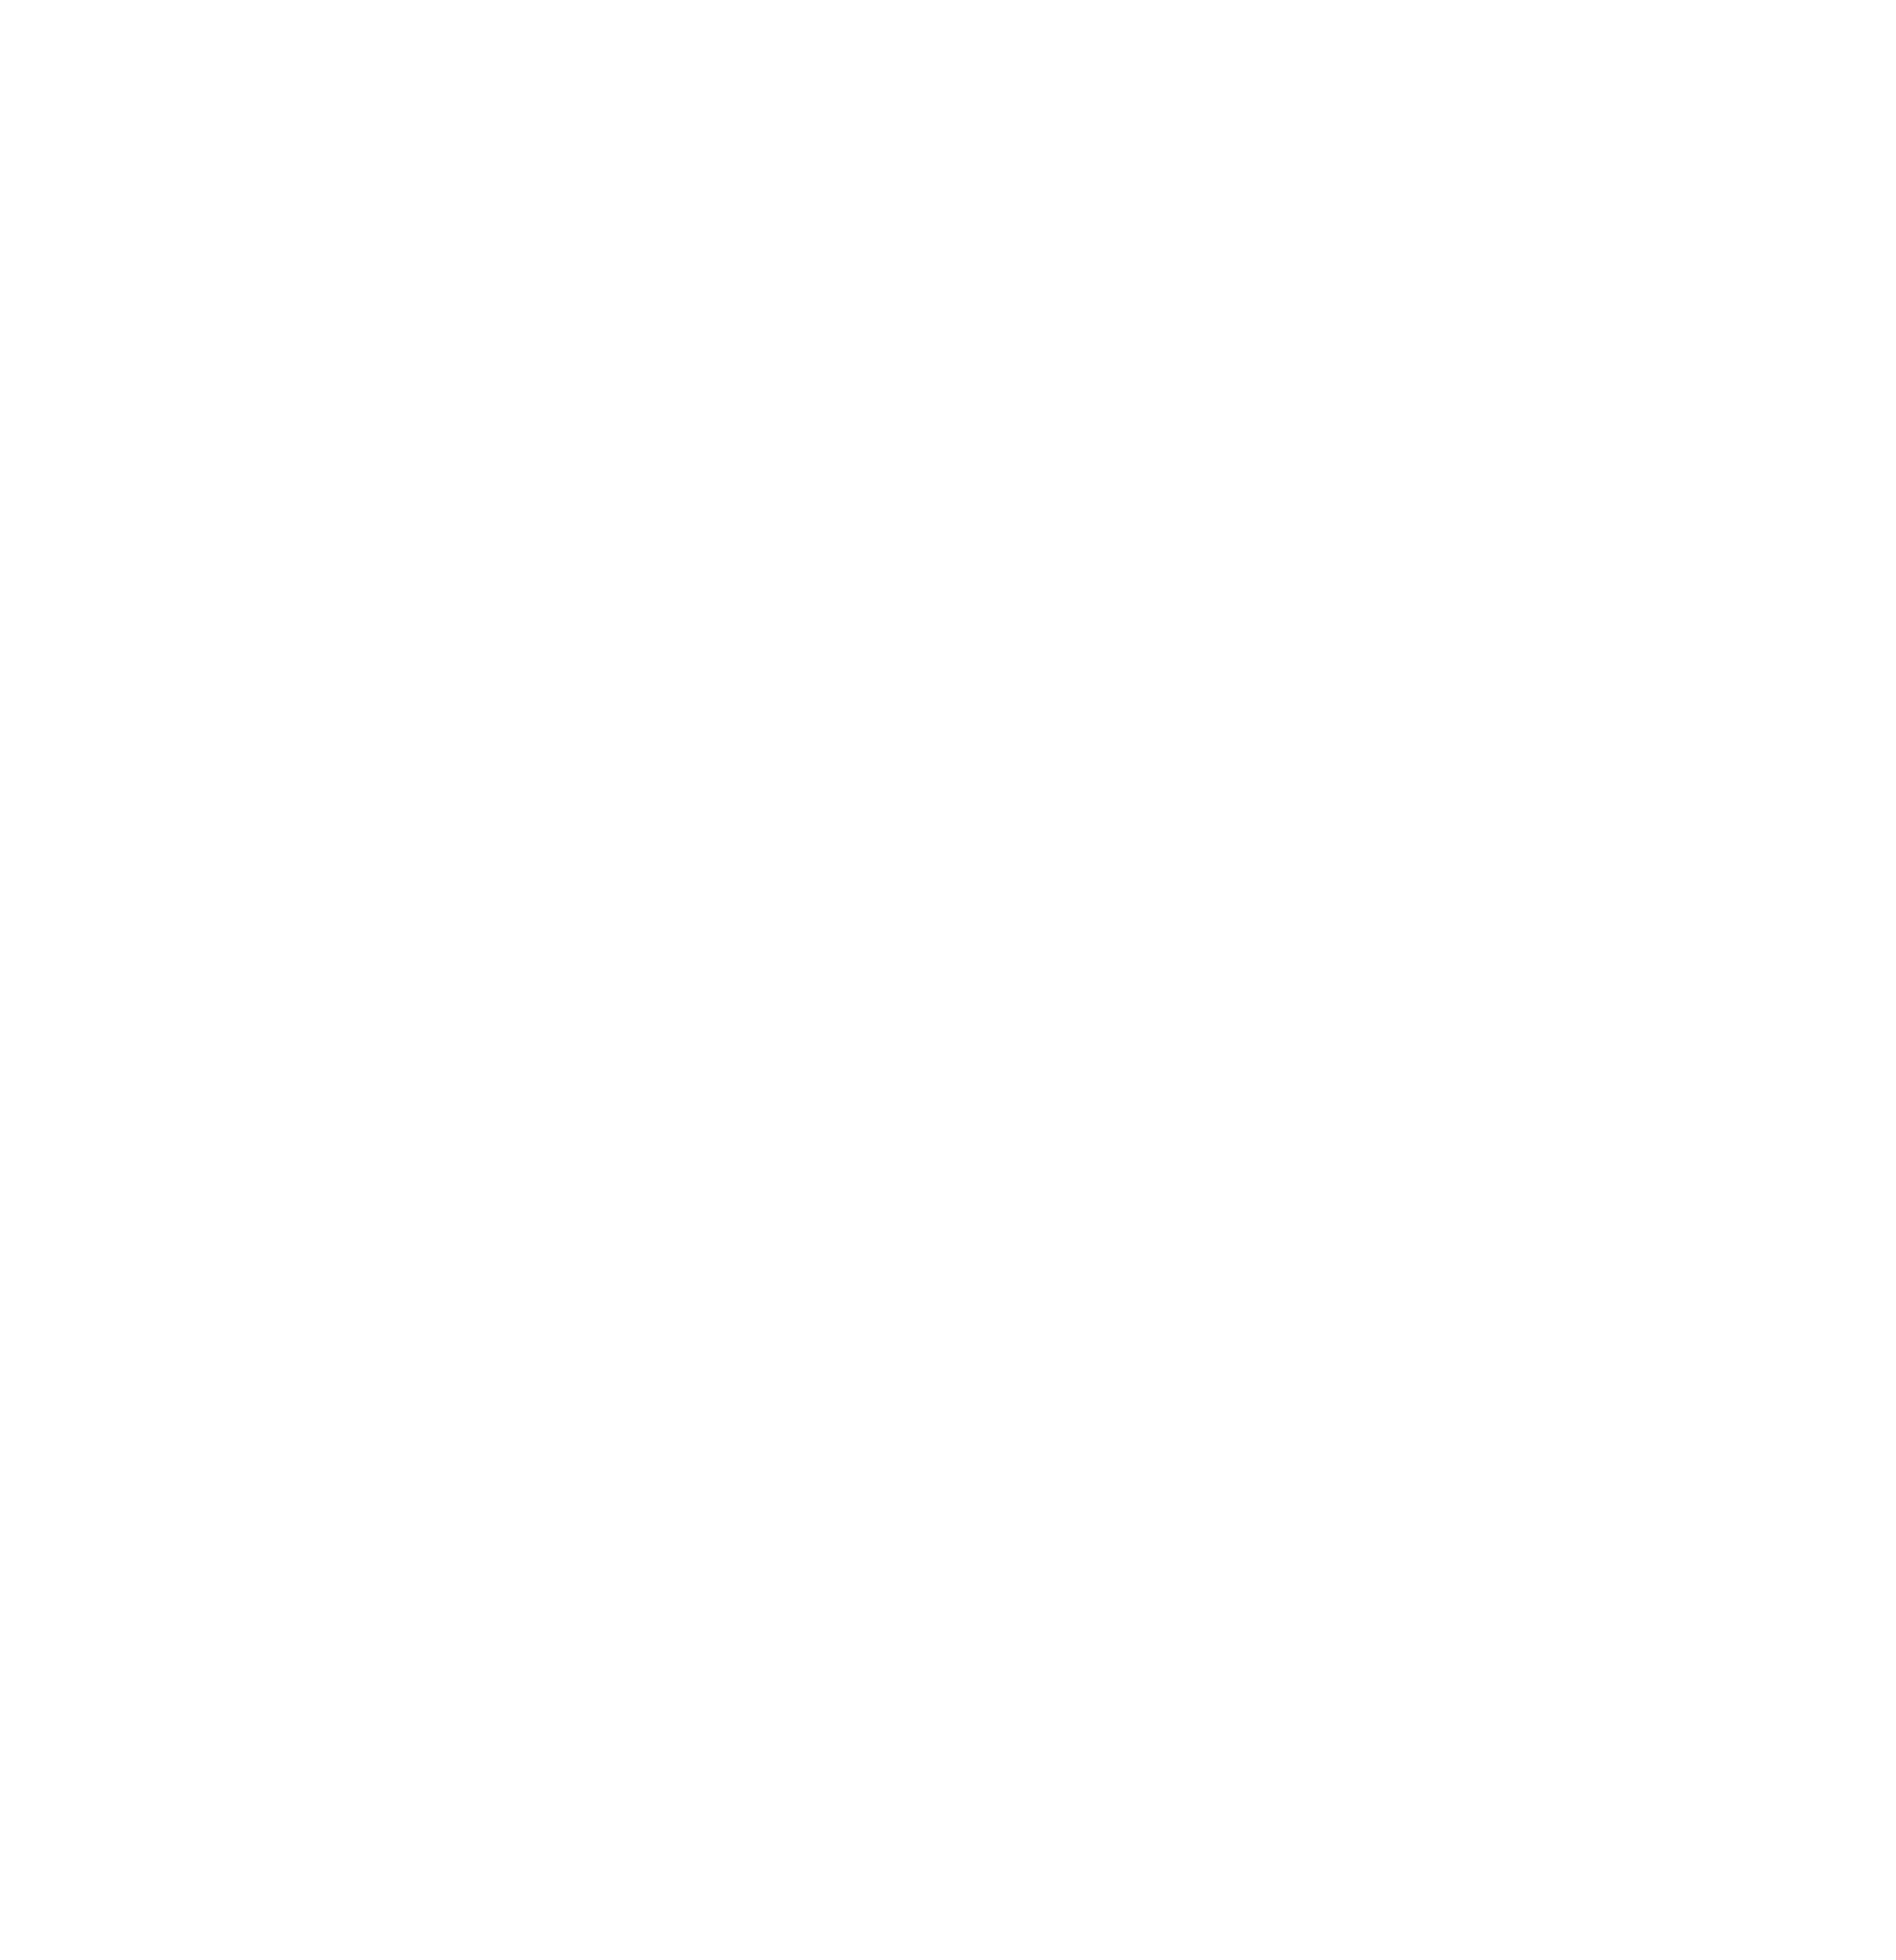 Roadside Software & Adventures